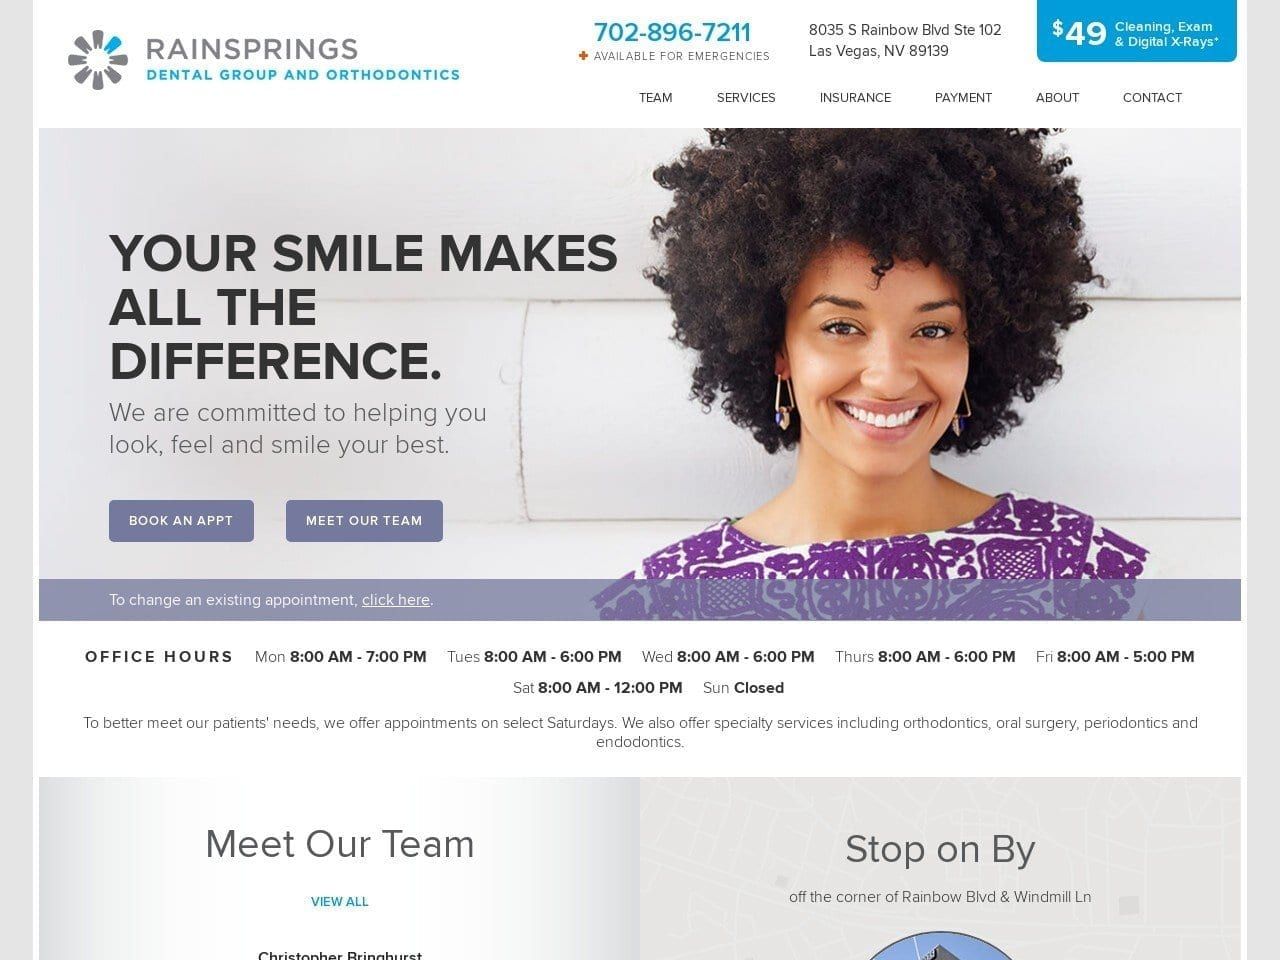 Rainsprings Dental Group and Orthodontics Website Screenshot from rainspringsdental.com